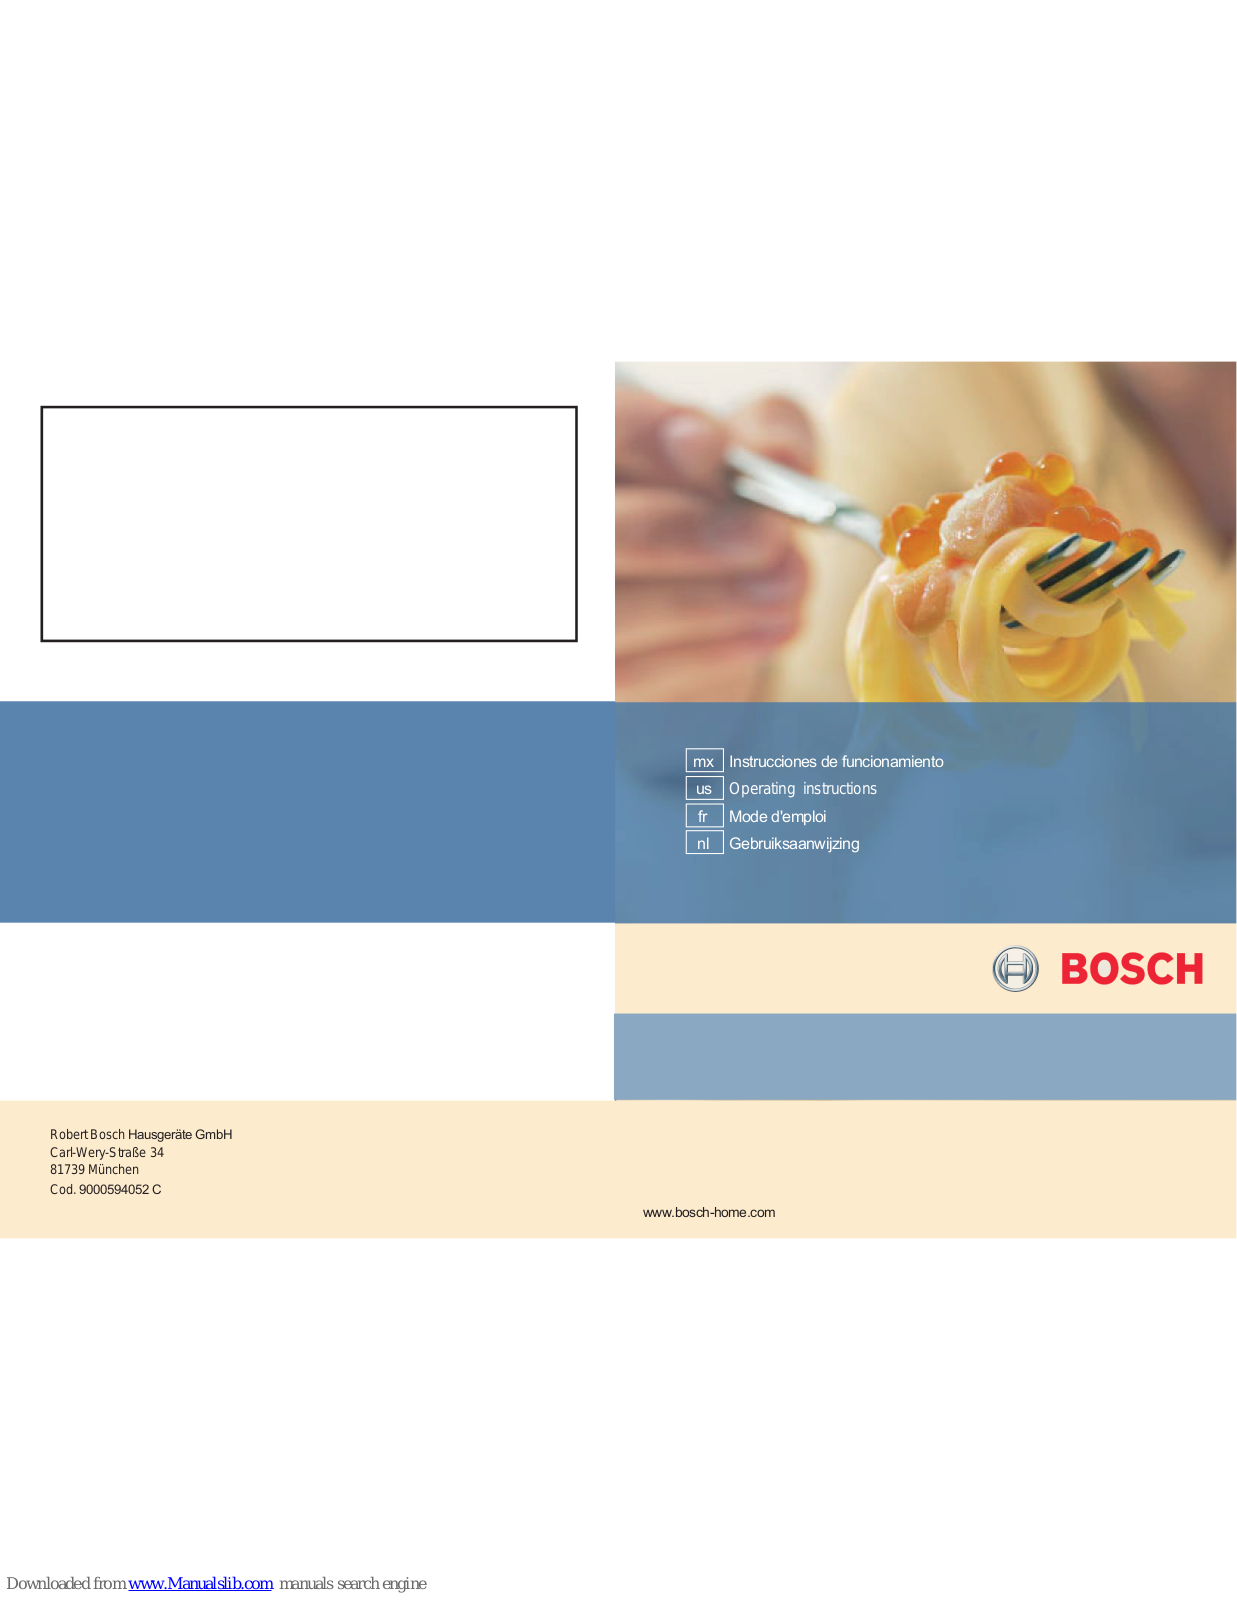 Bosch PCQ715A90V, PCR915B91V, PCQ715A80V, PCQ715M90V, PCT915B91V Operating Instructions Manual